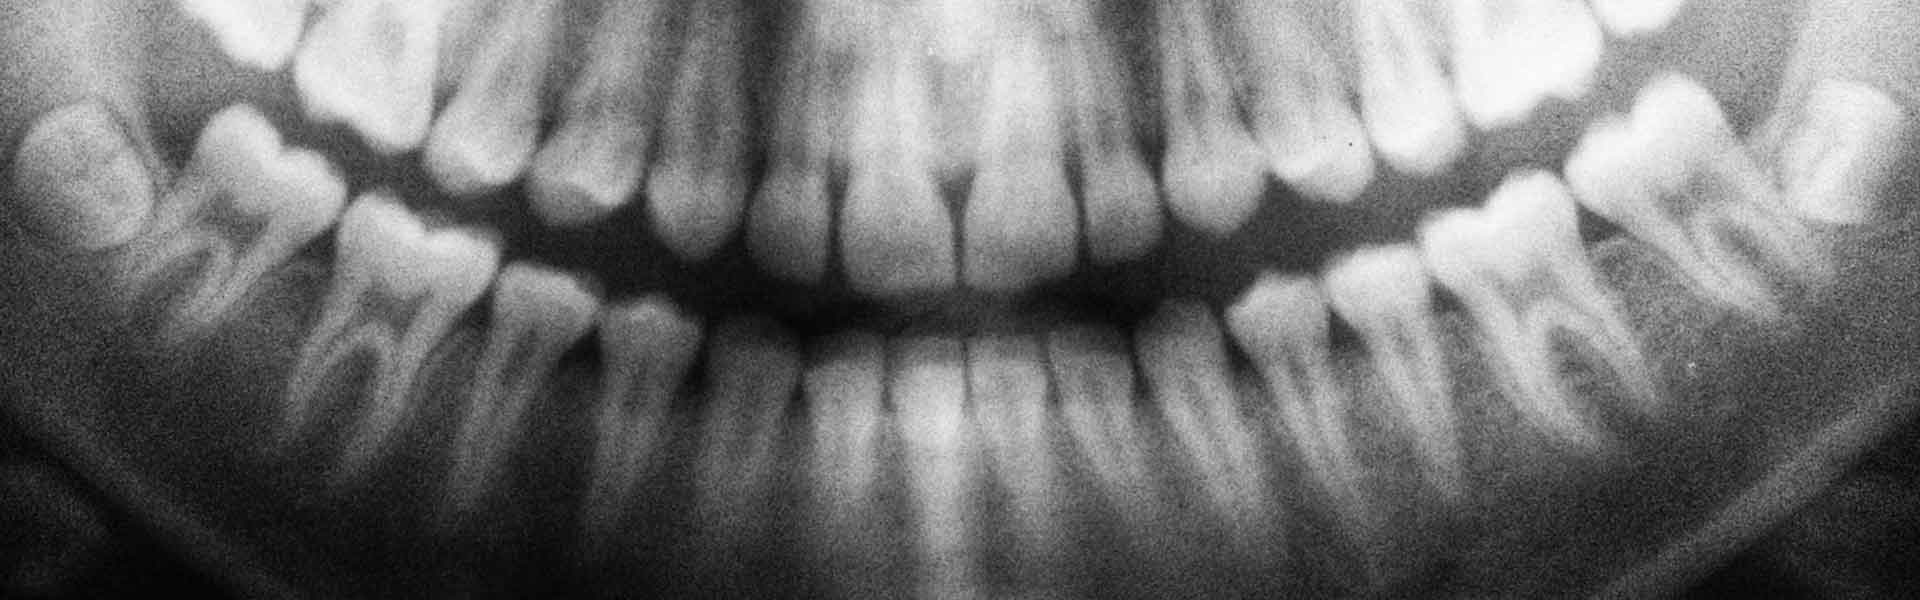 TAC - Diagnóstico imagen - Clínica dental Brasilocho - Clínica dental Cádiz - Odontología - Dentistas en Cádiz